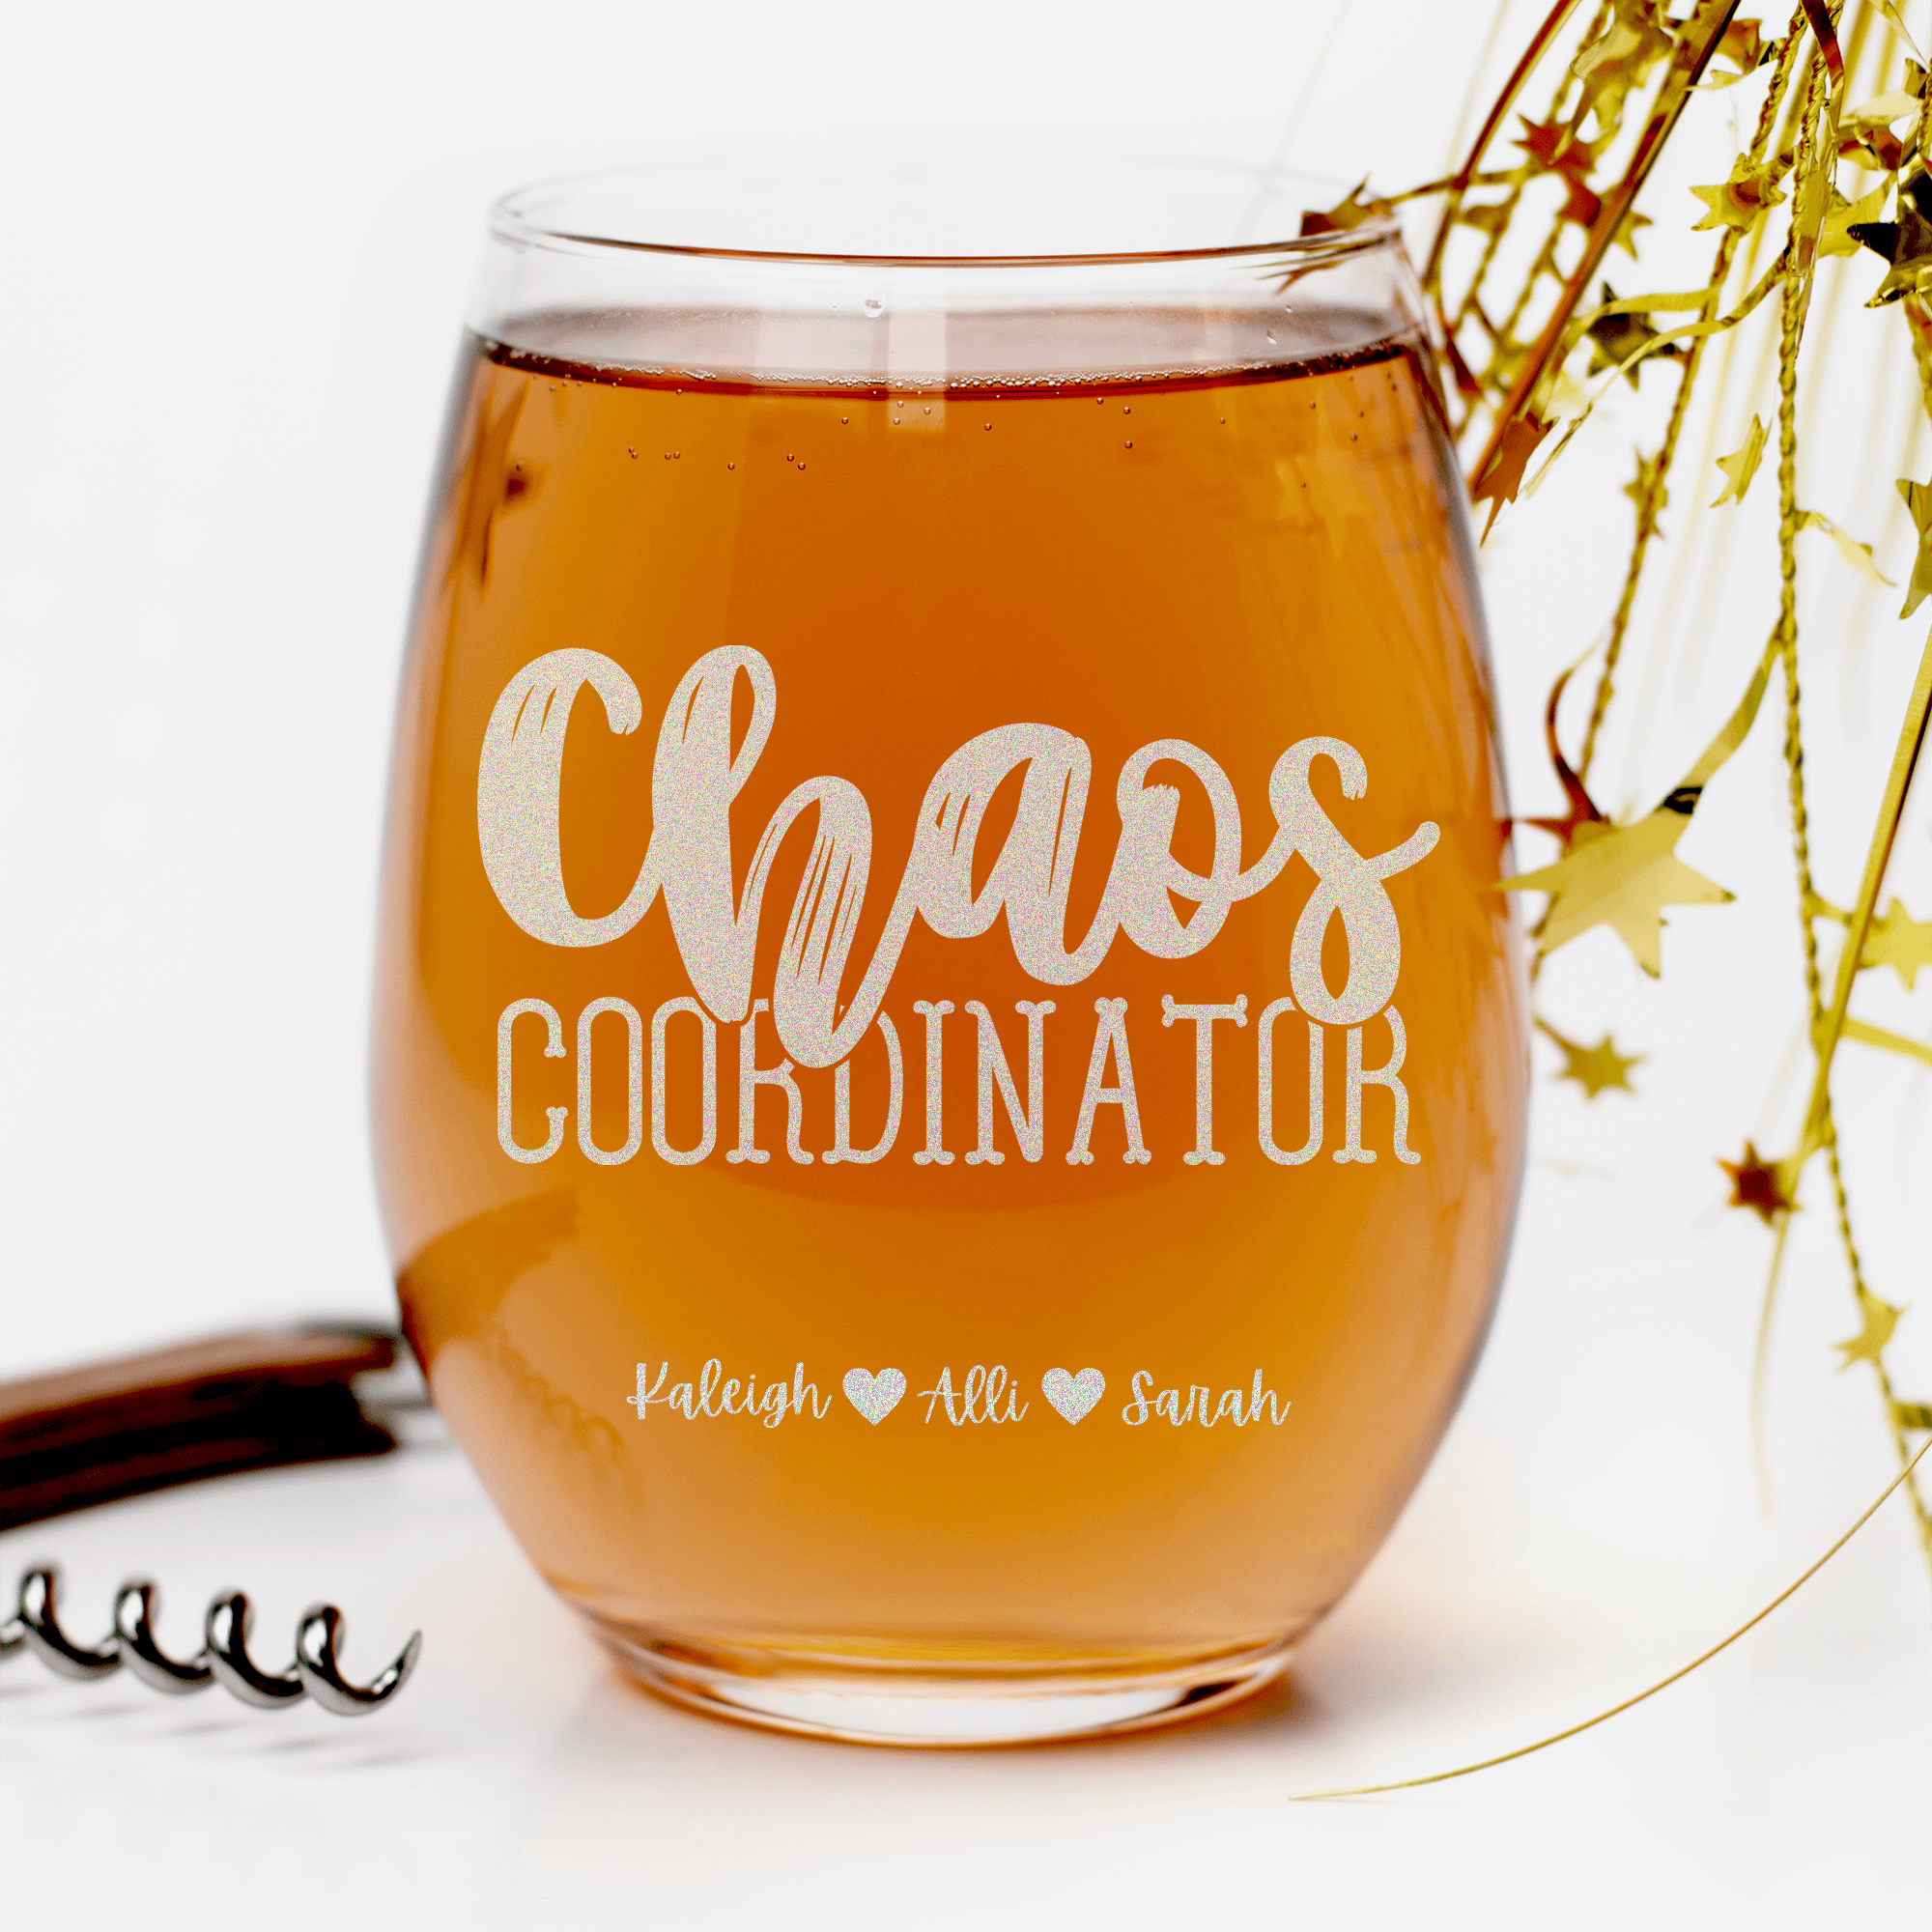 Chaos Coordinator Stemless Wine Glass